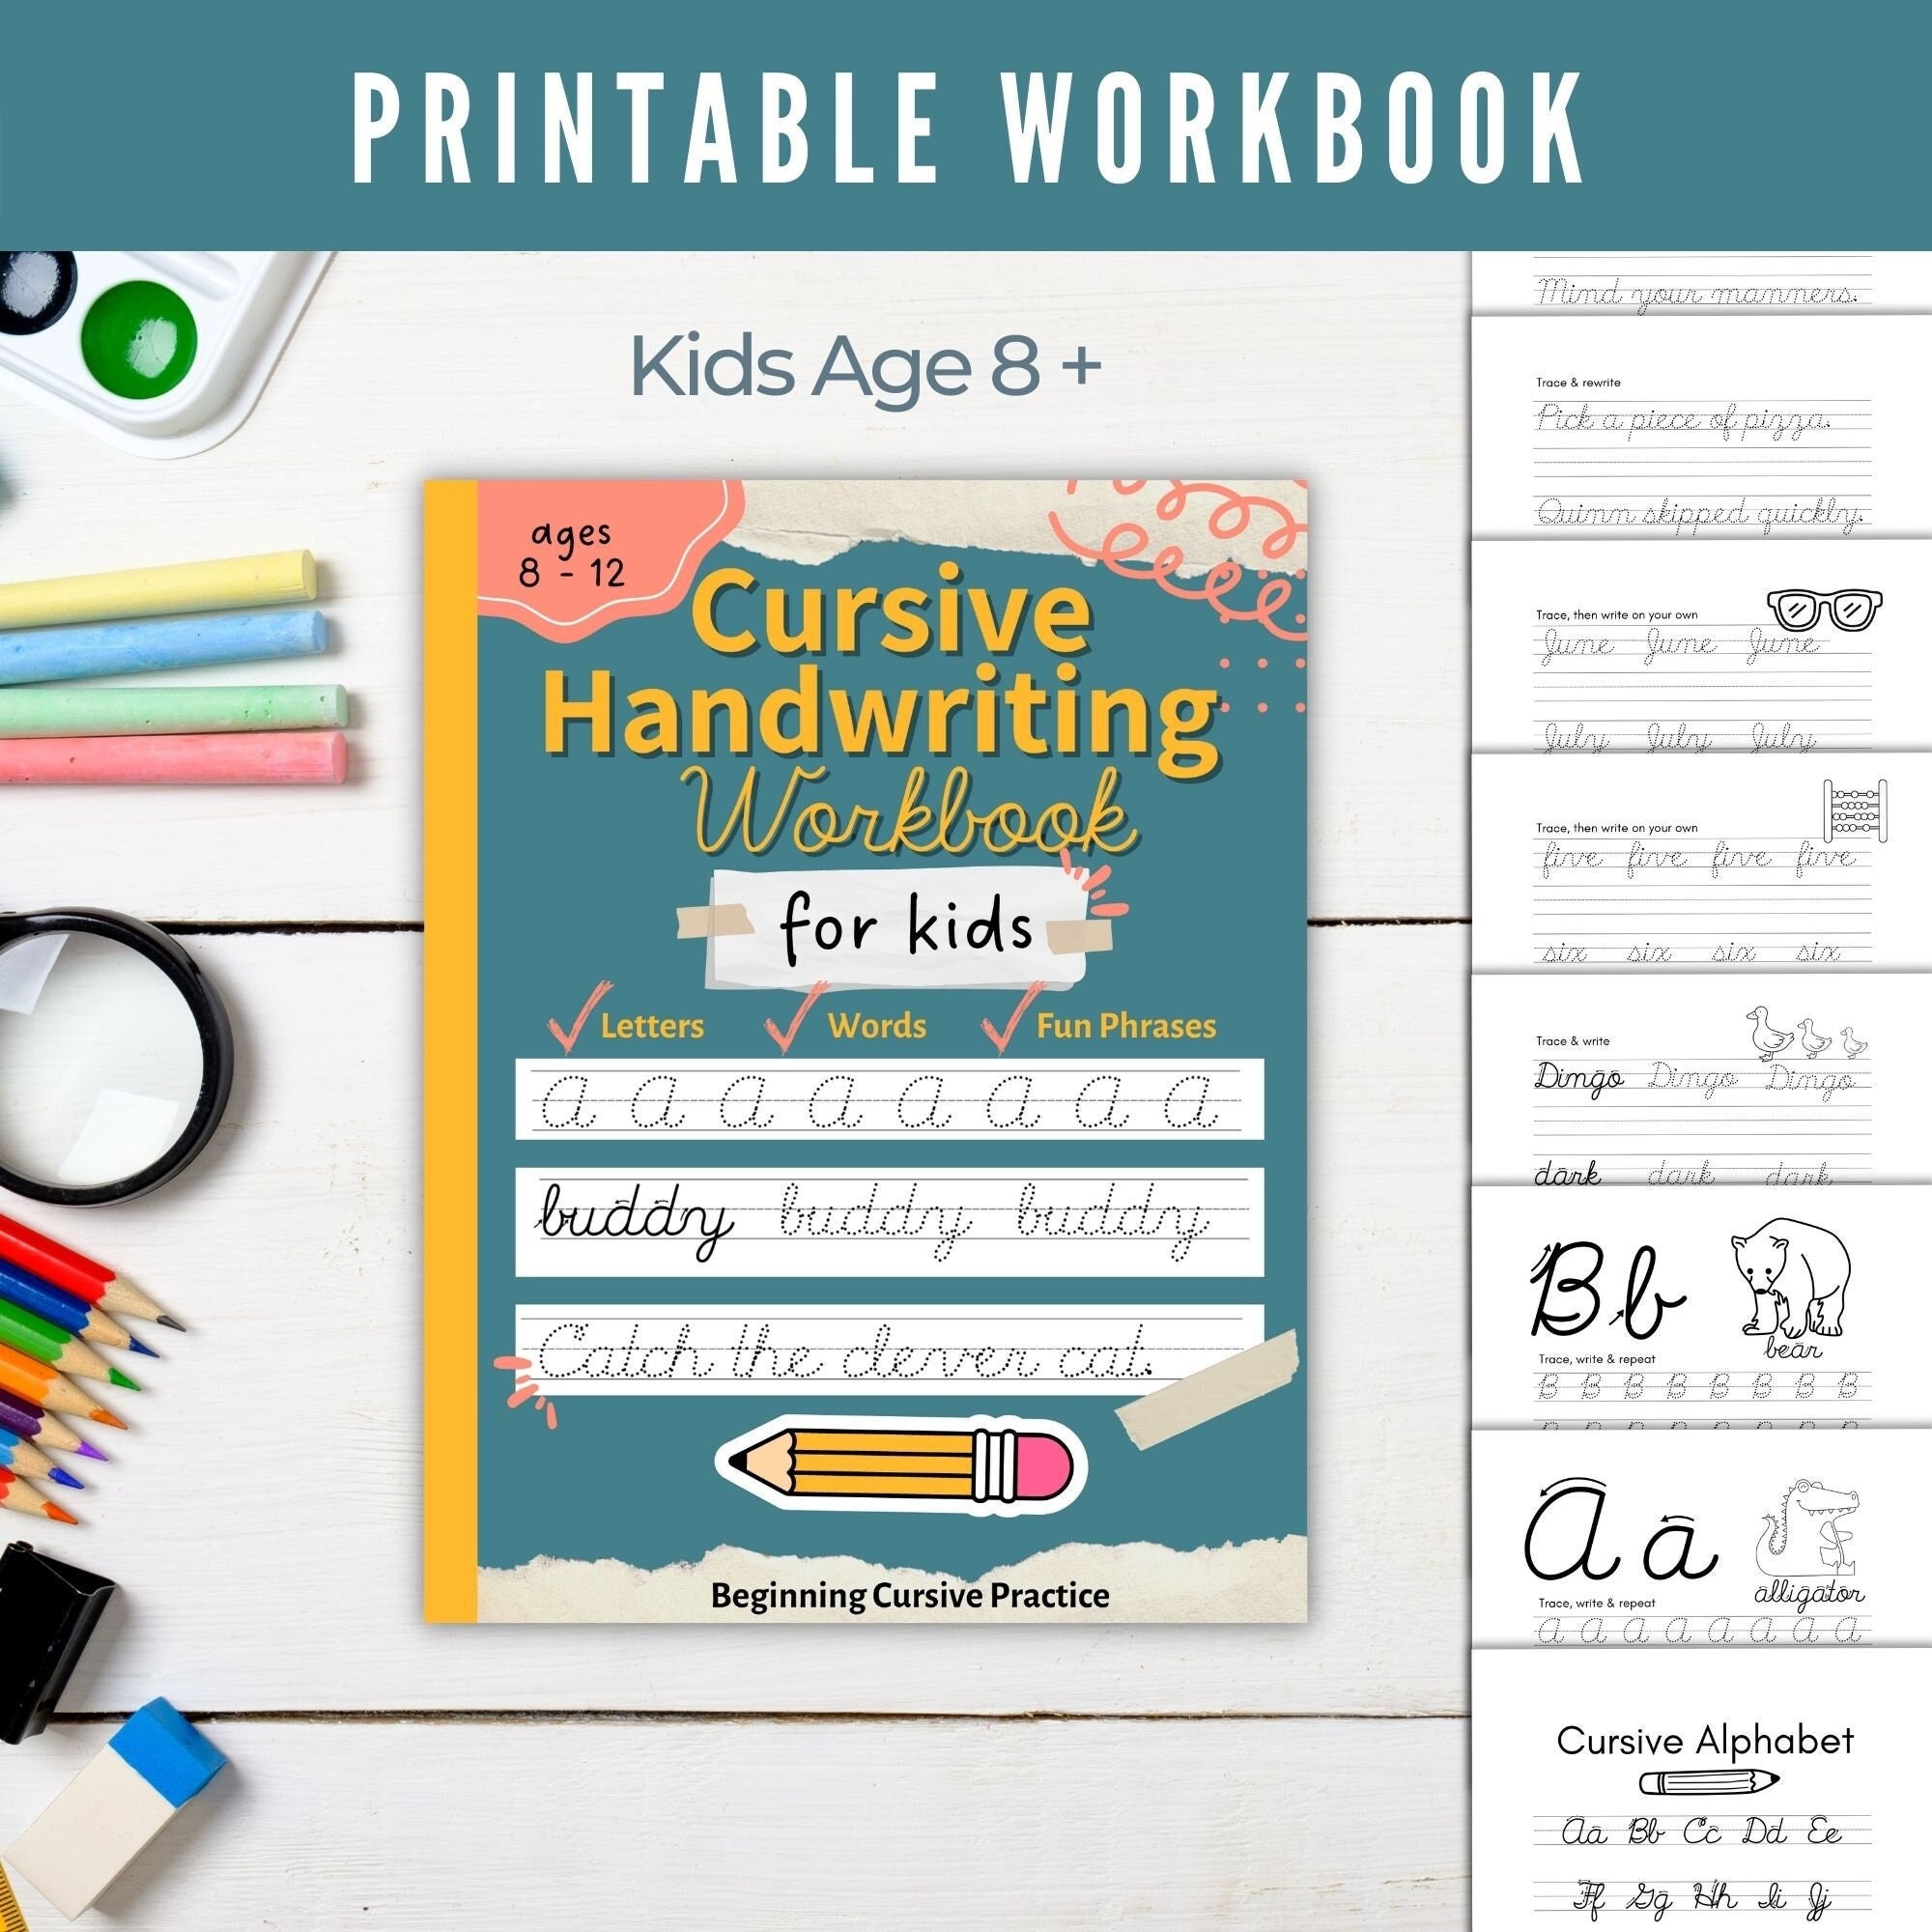 Just Handwriting *PRE-CURSIVE - Senior Infants (incl Free Practice Copy)